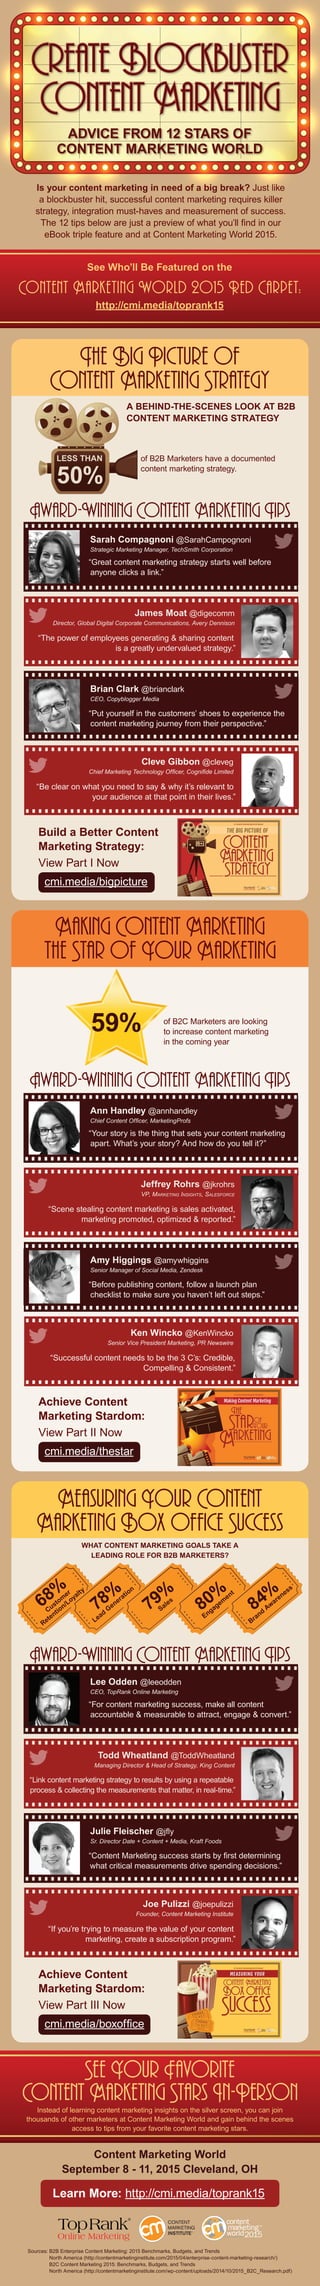 Create Blockbuster Content Marketing - CMWorld 2015 Infographic